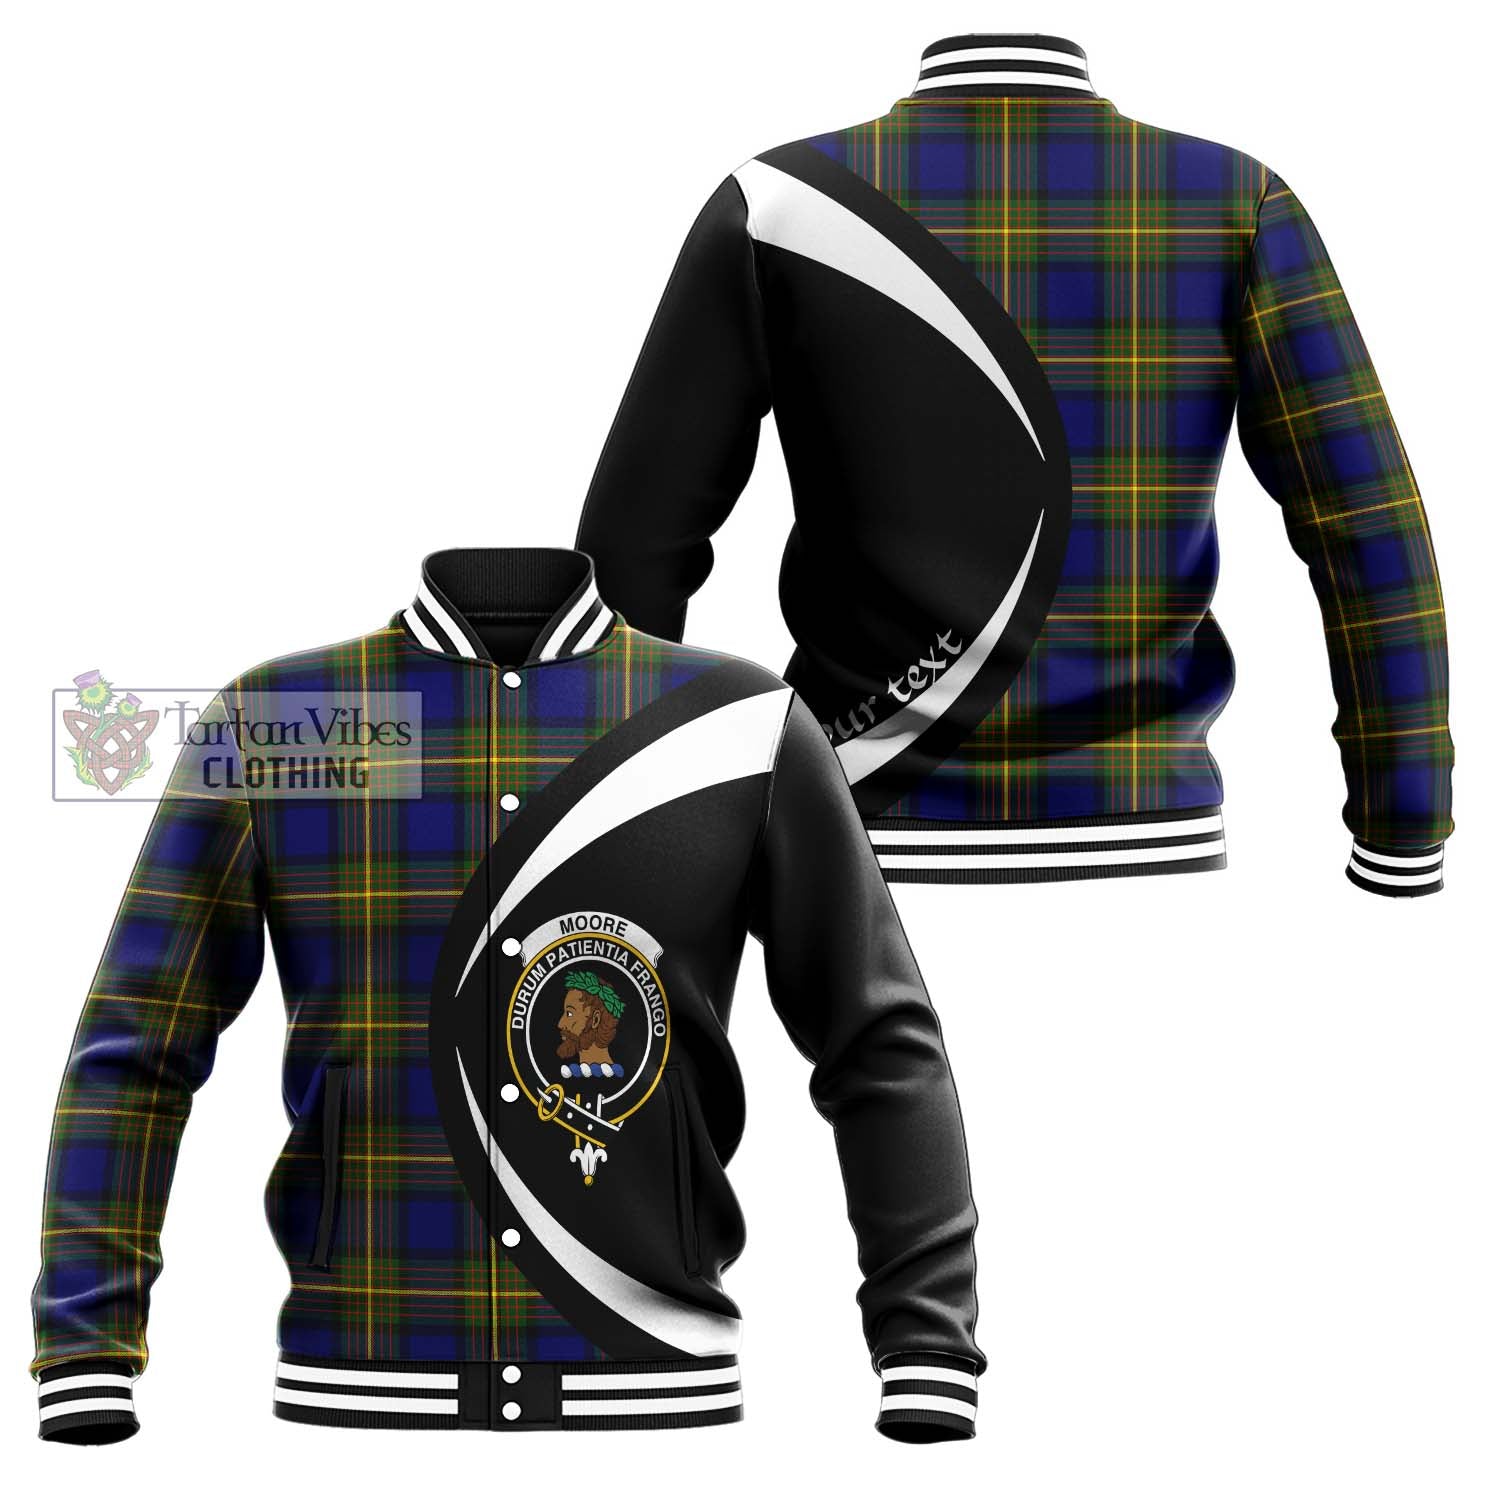 Tartan Vibes Clothing Moore Tartan Baseball Jacket with Family Crest Circle Style